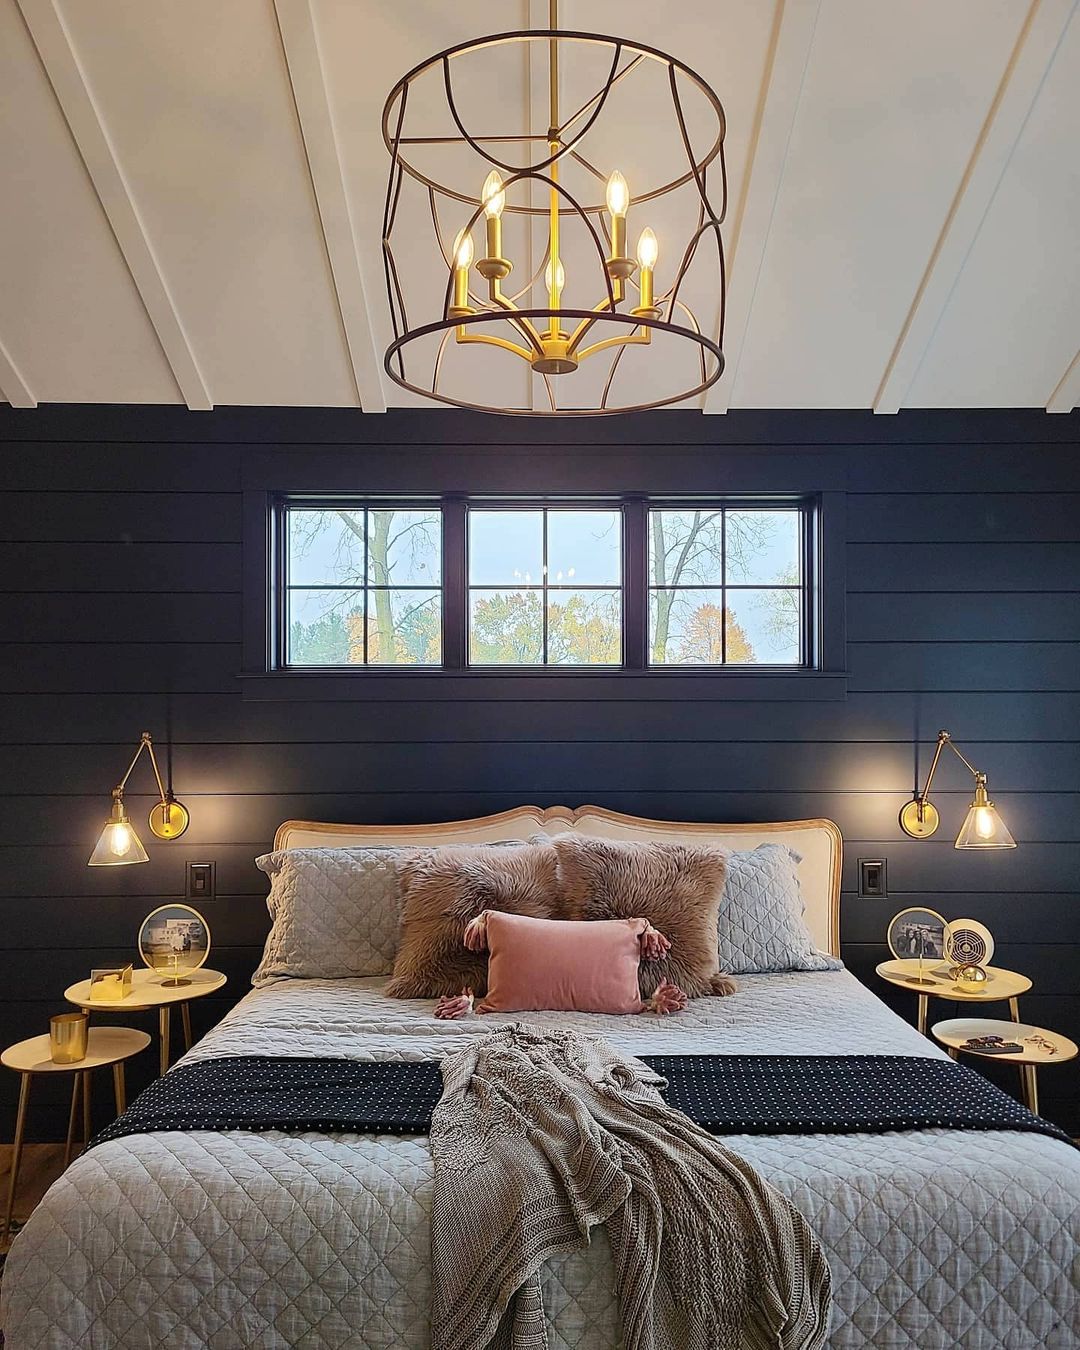 Brass bedroom chandelier and two bedside lamps. Photo by Instagram User @cvi_design